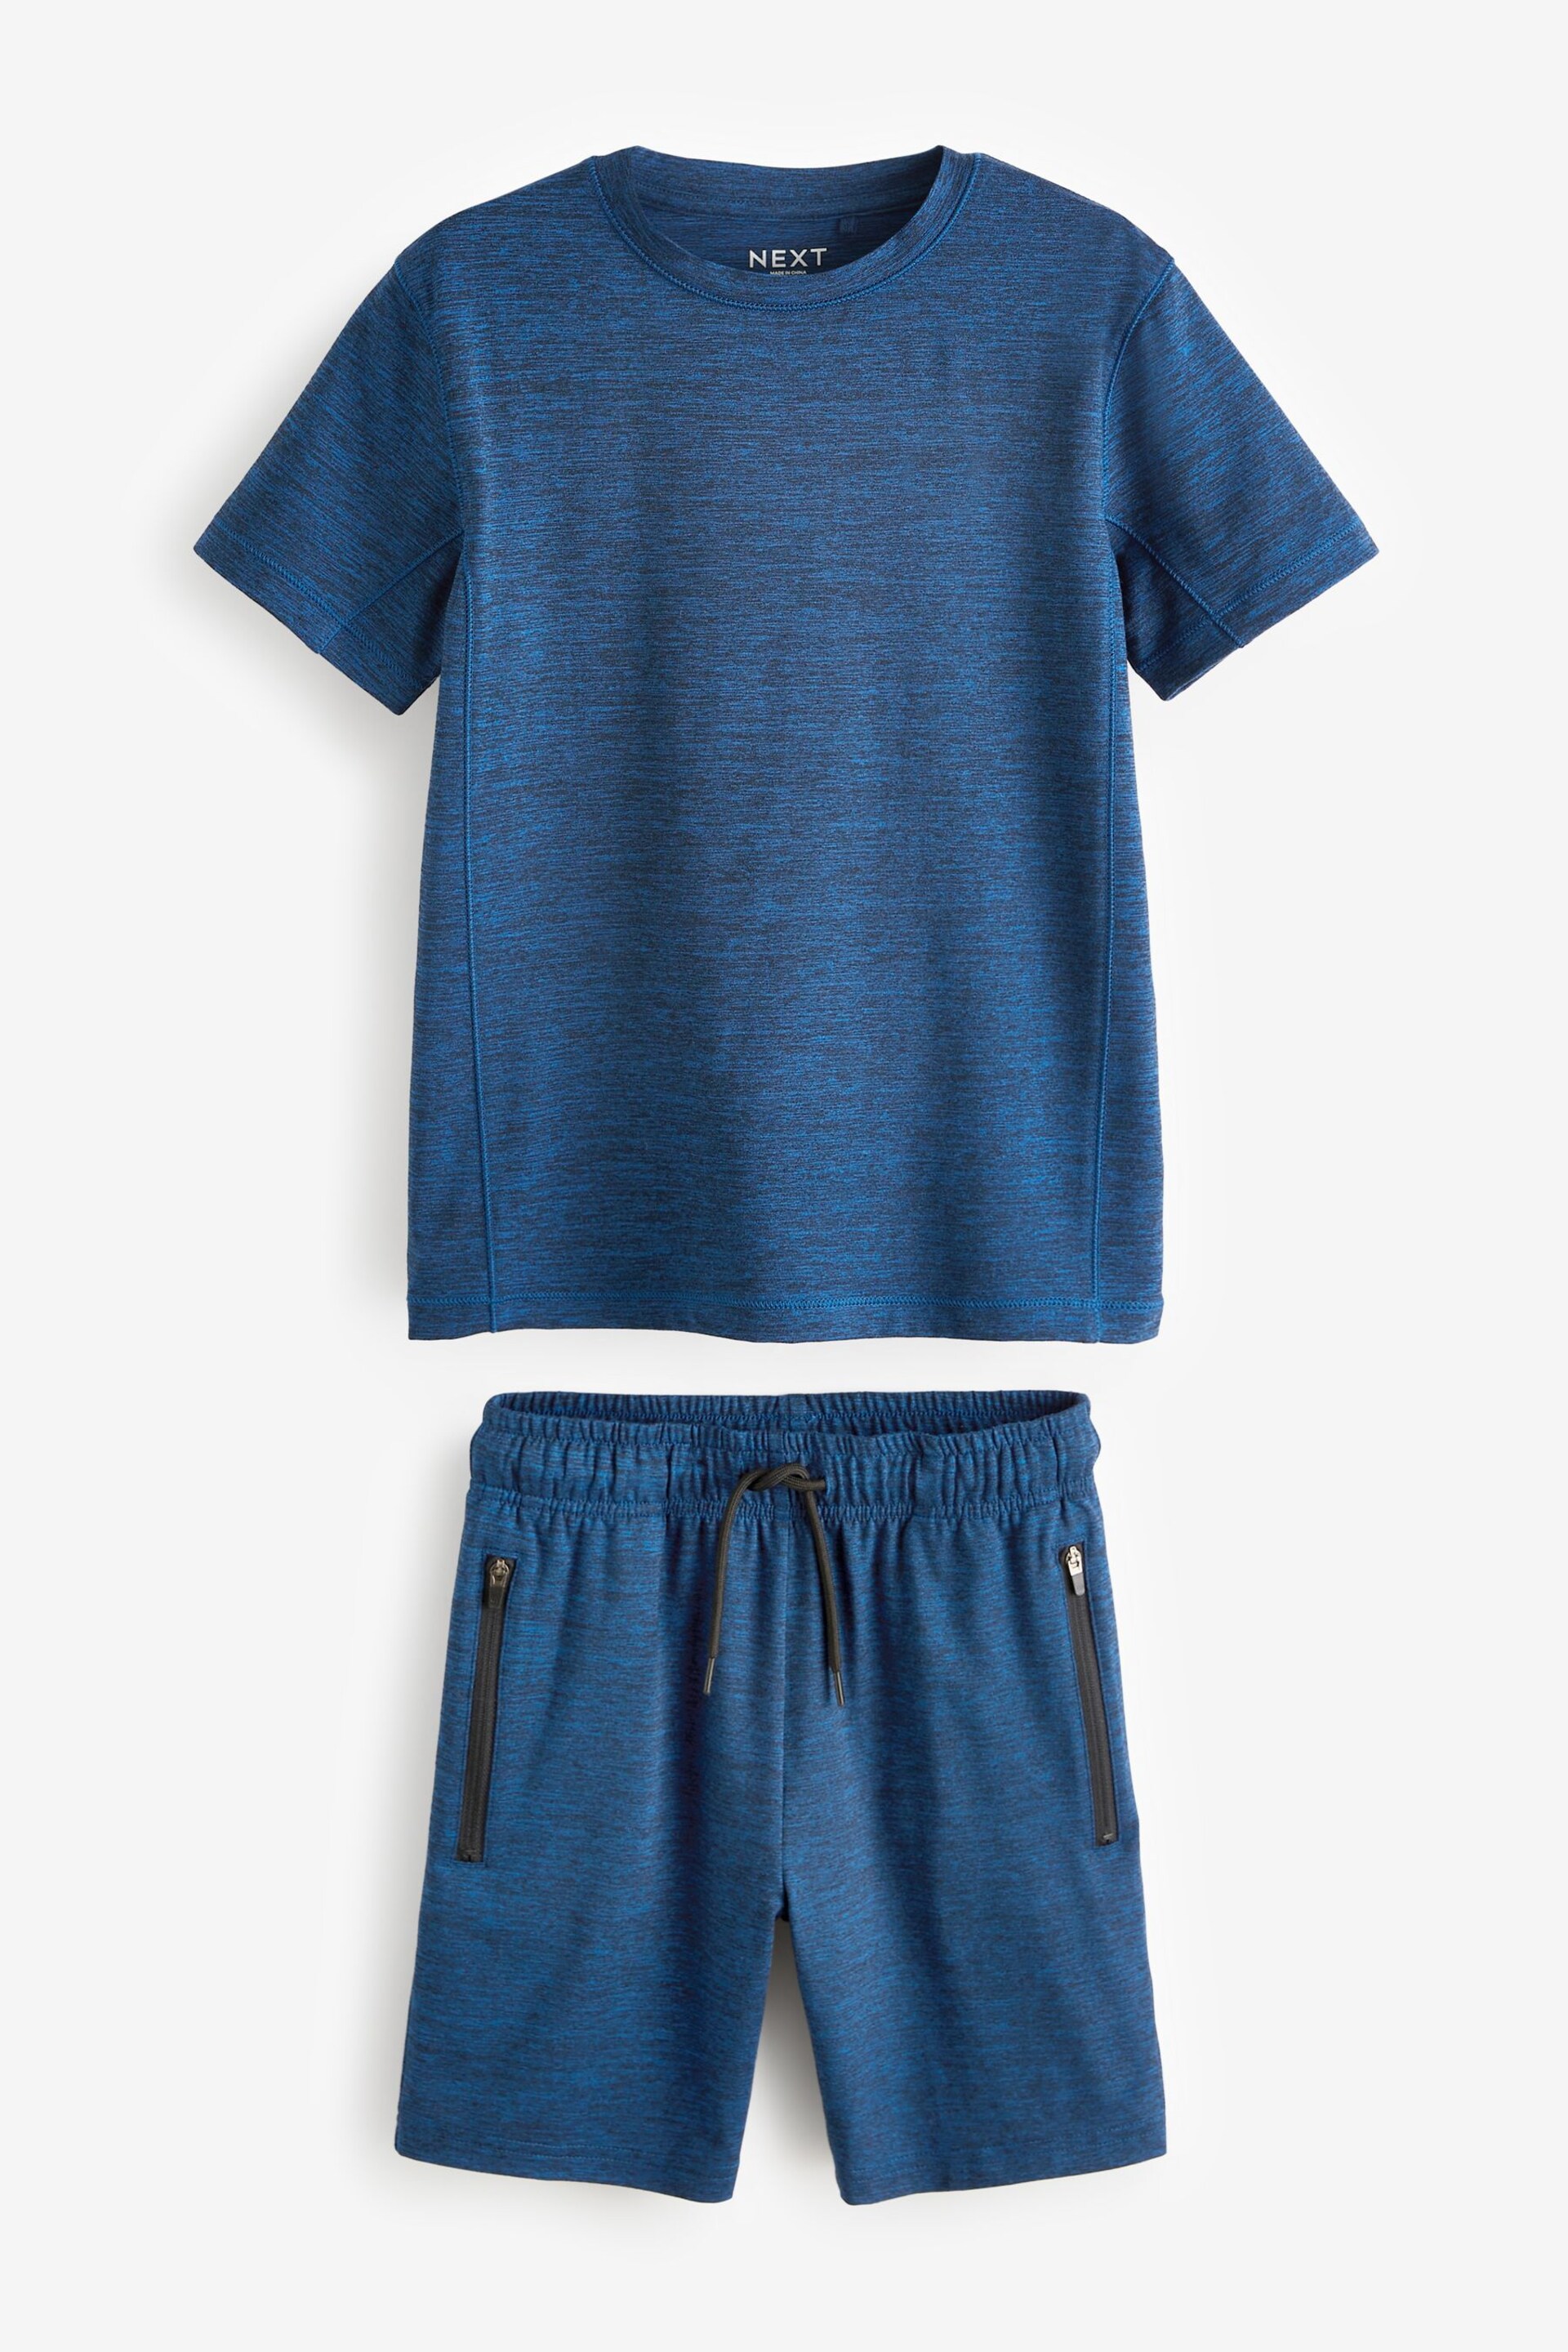 Navy Blue Sports T-shirt and Shorts Set (3-16yrs) - Image 1 of 3